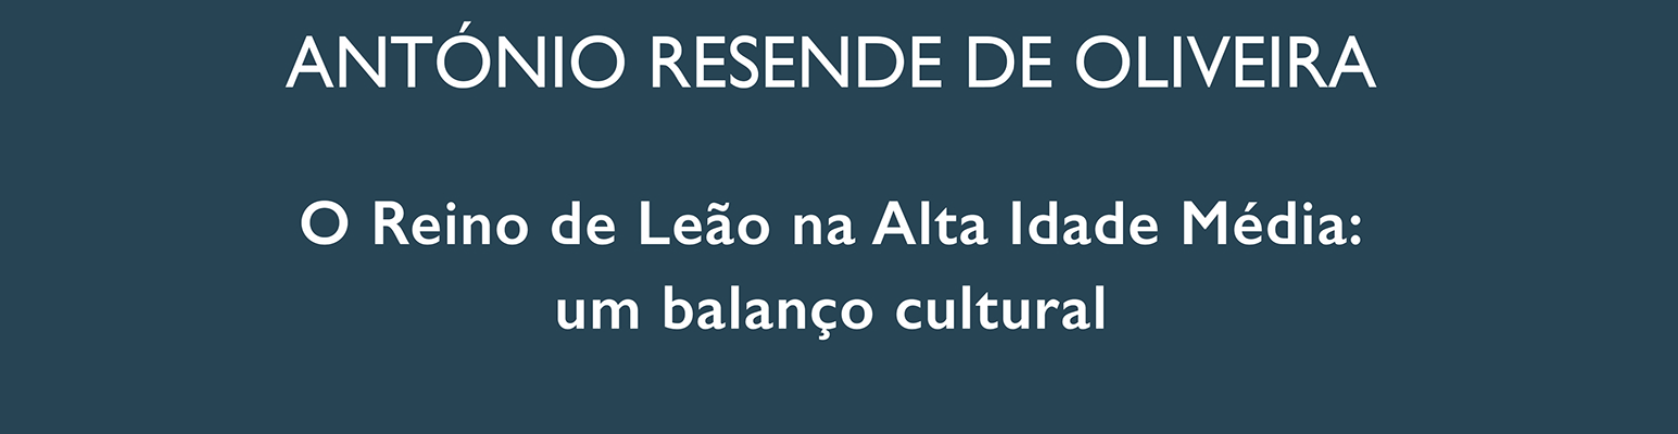 Conferência por António Resende de Oliveira